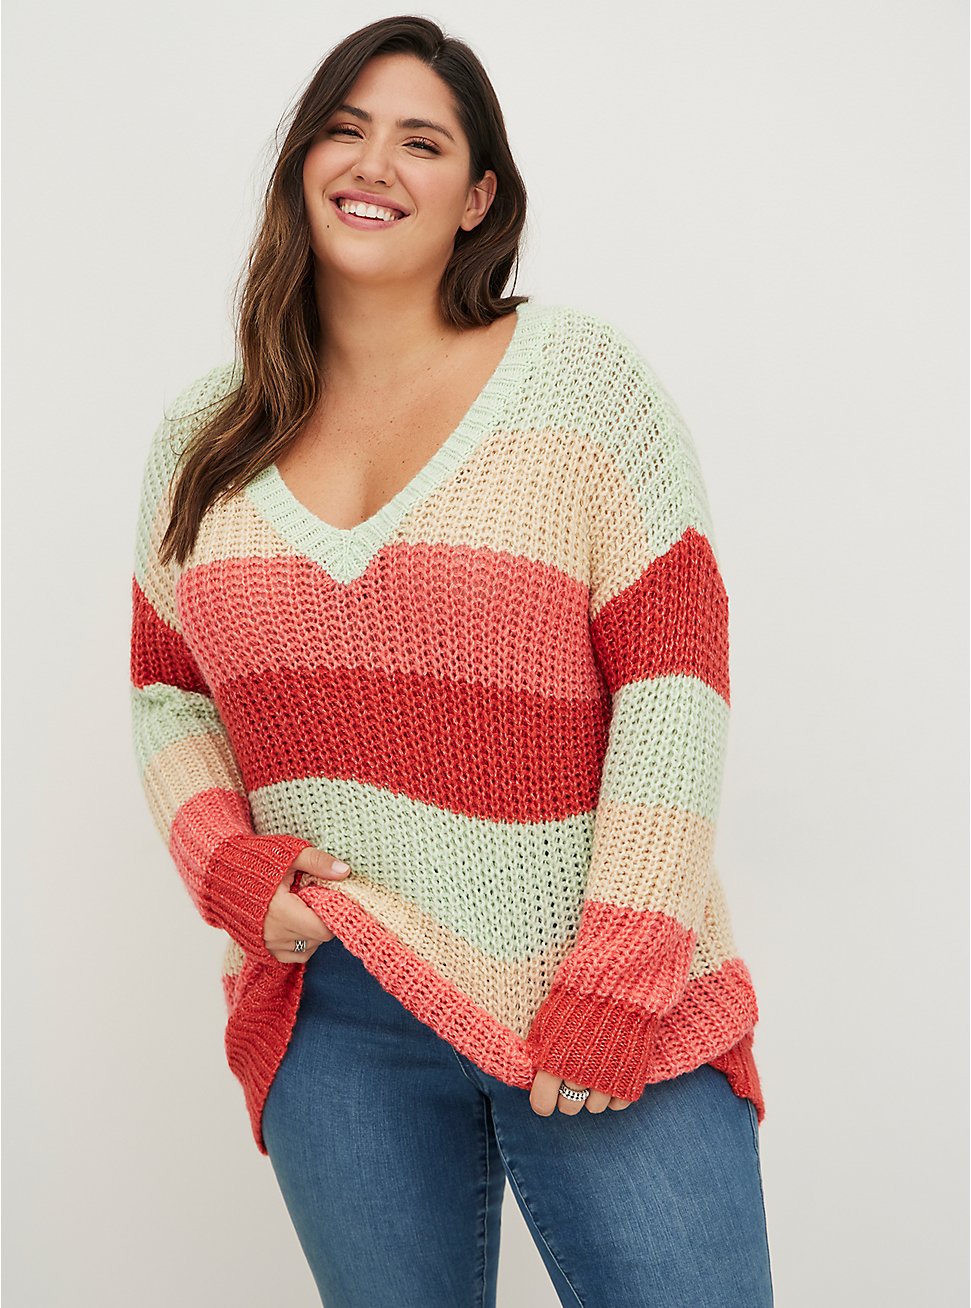 Pullover Sweater - Multi Stripe, MULTI STRIPE, hi-res